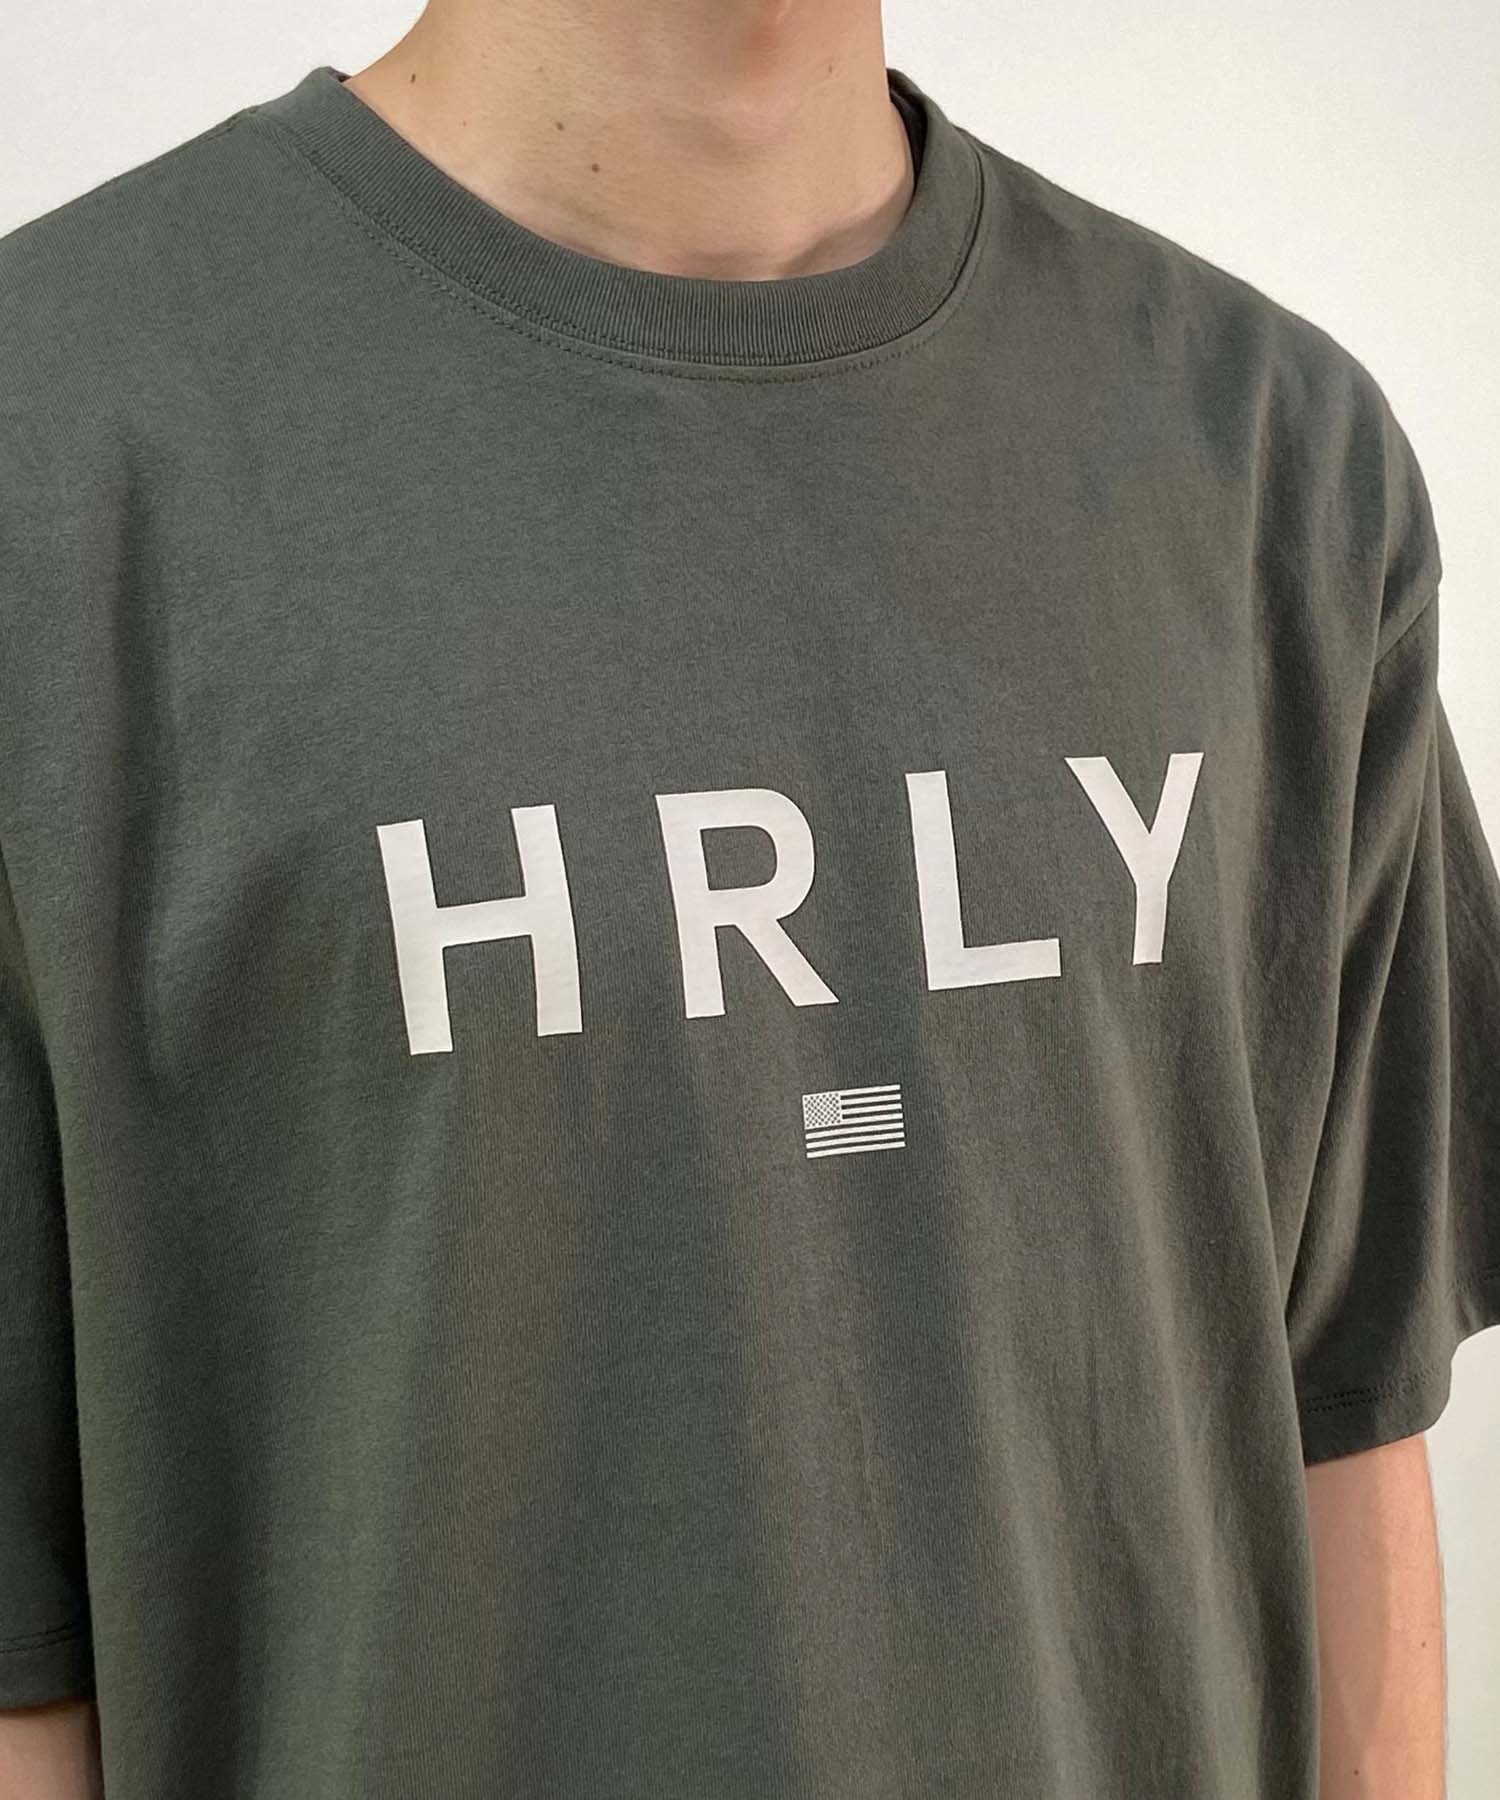 Hurley ハーレー OVERSIZED HURLEY SHORT SLEEVE TEE メンズ 半袖 Tシャツ MSS2411020(OLV-S)